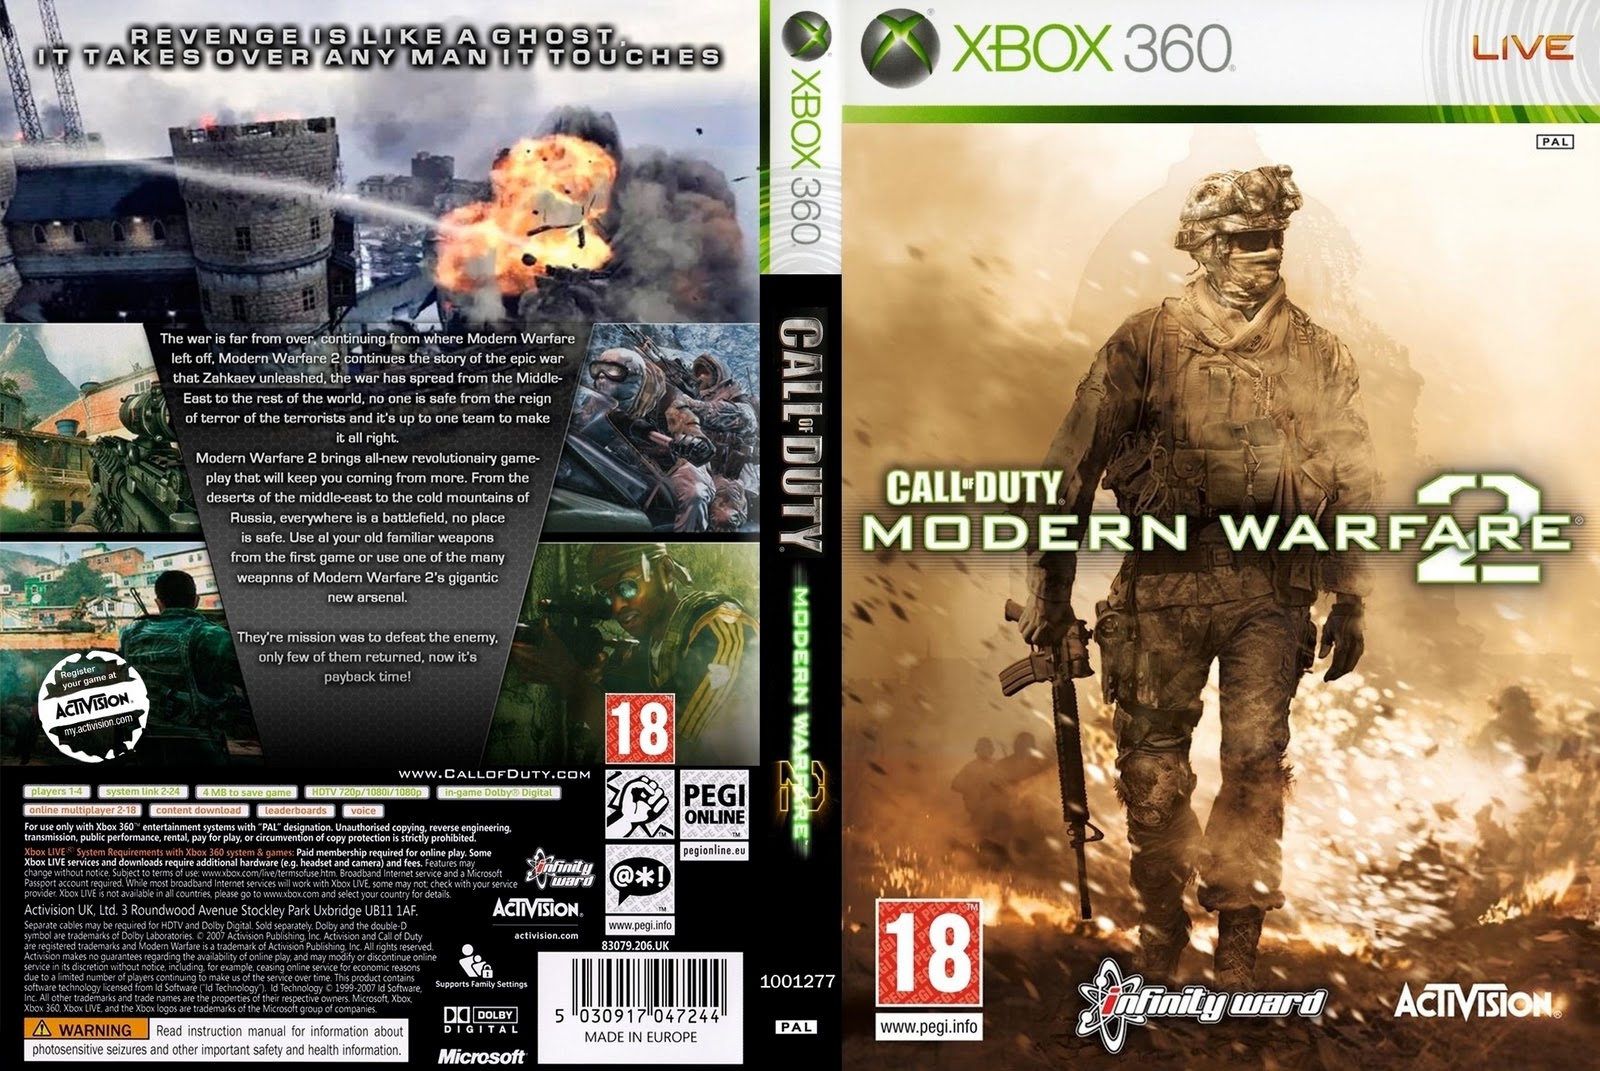 'Call of Duty 4: Modern Warfare' is a